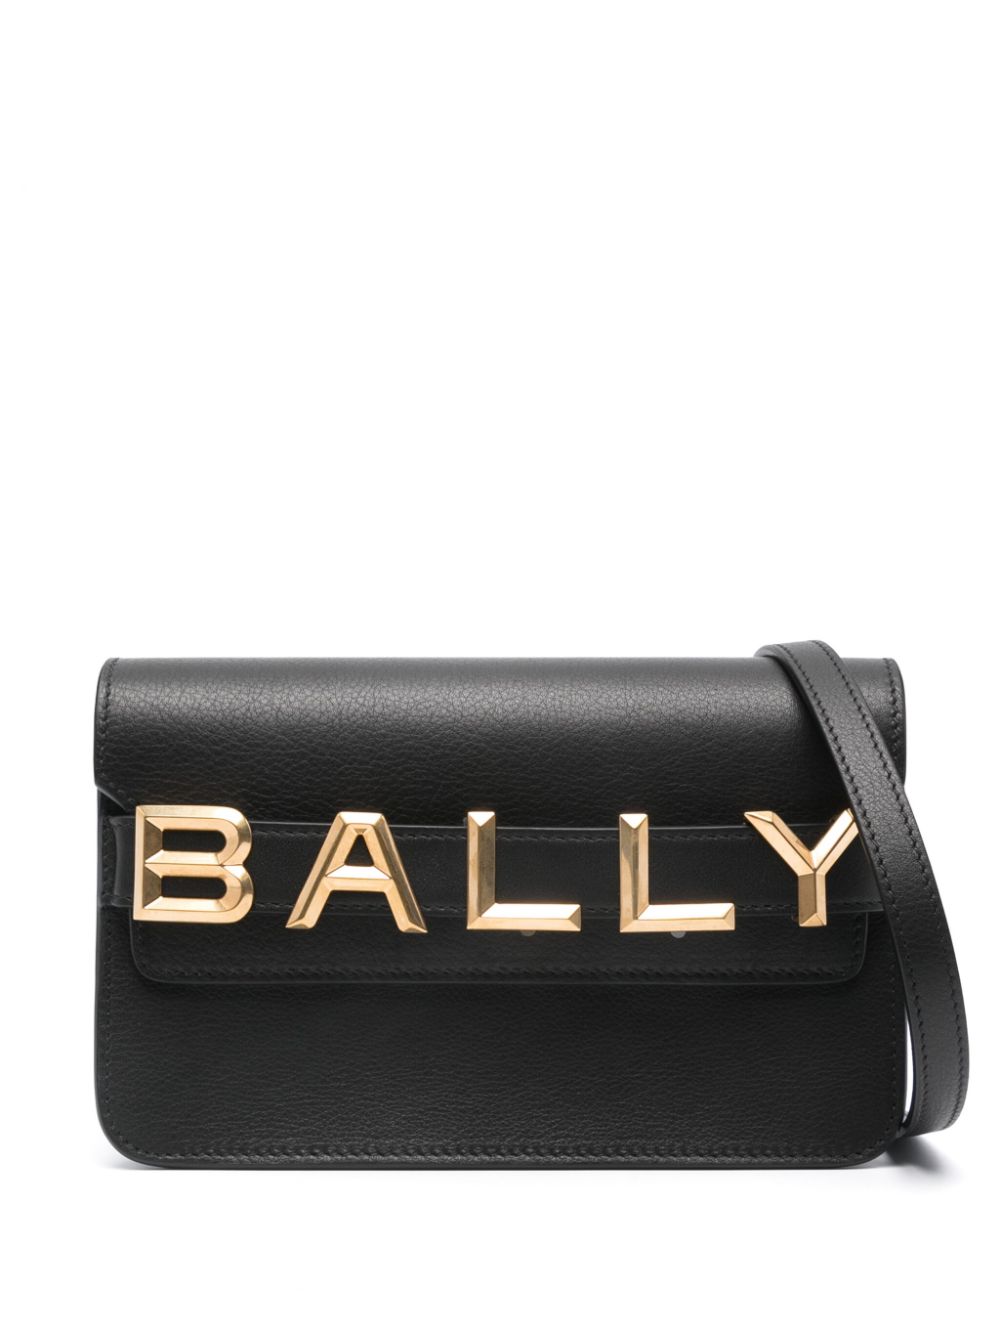 Shop Bally Luxurious Black Leather Crossbody Handbag For Women